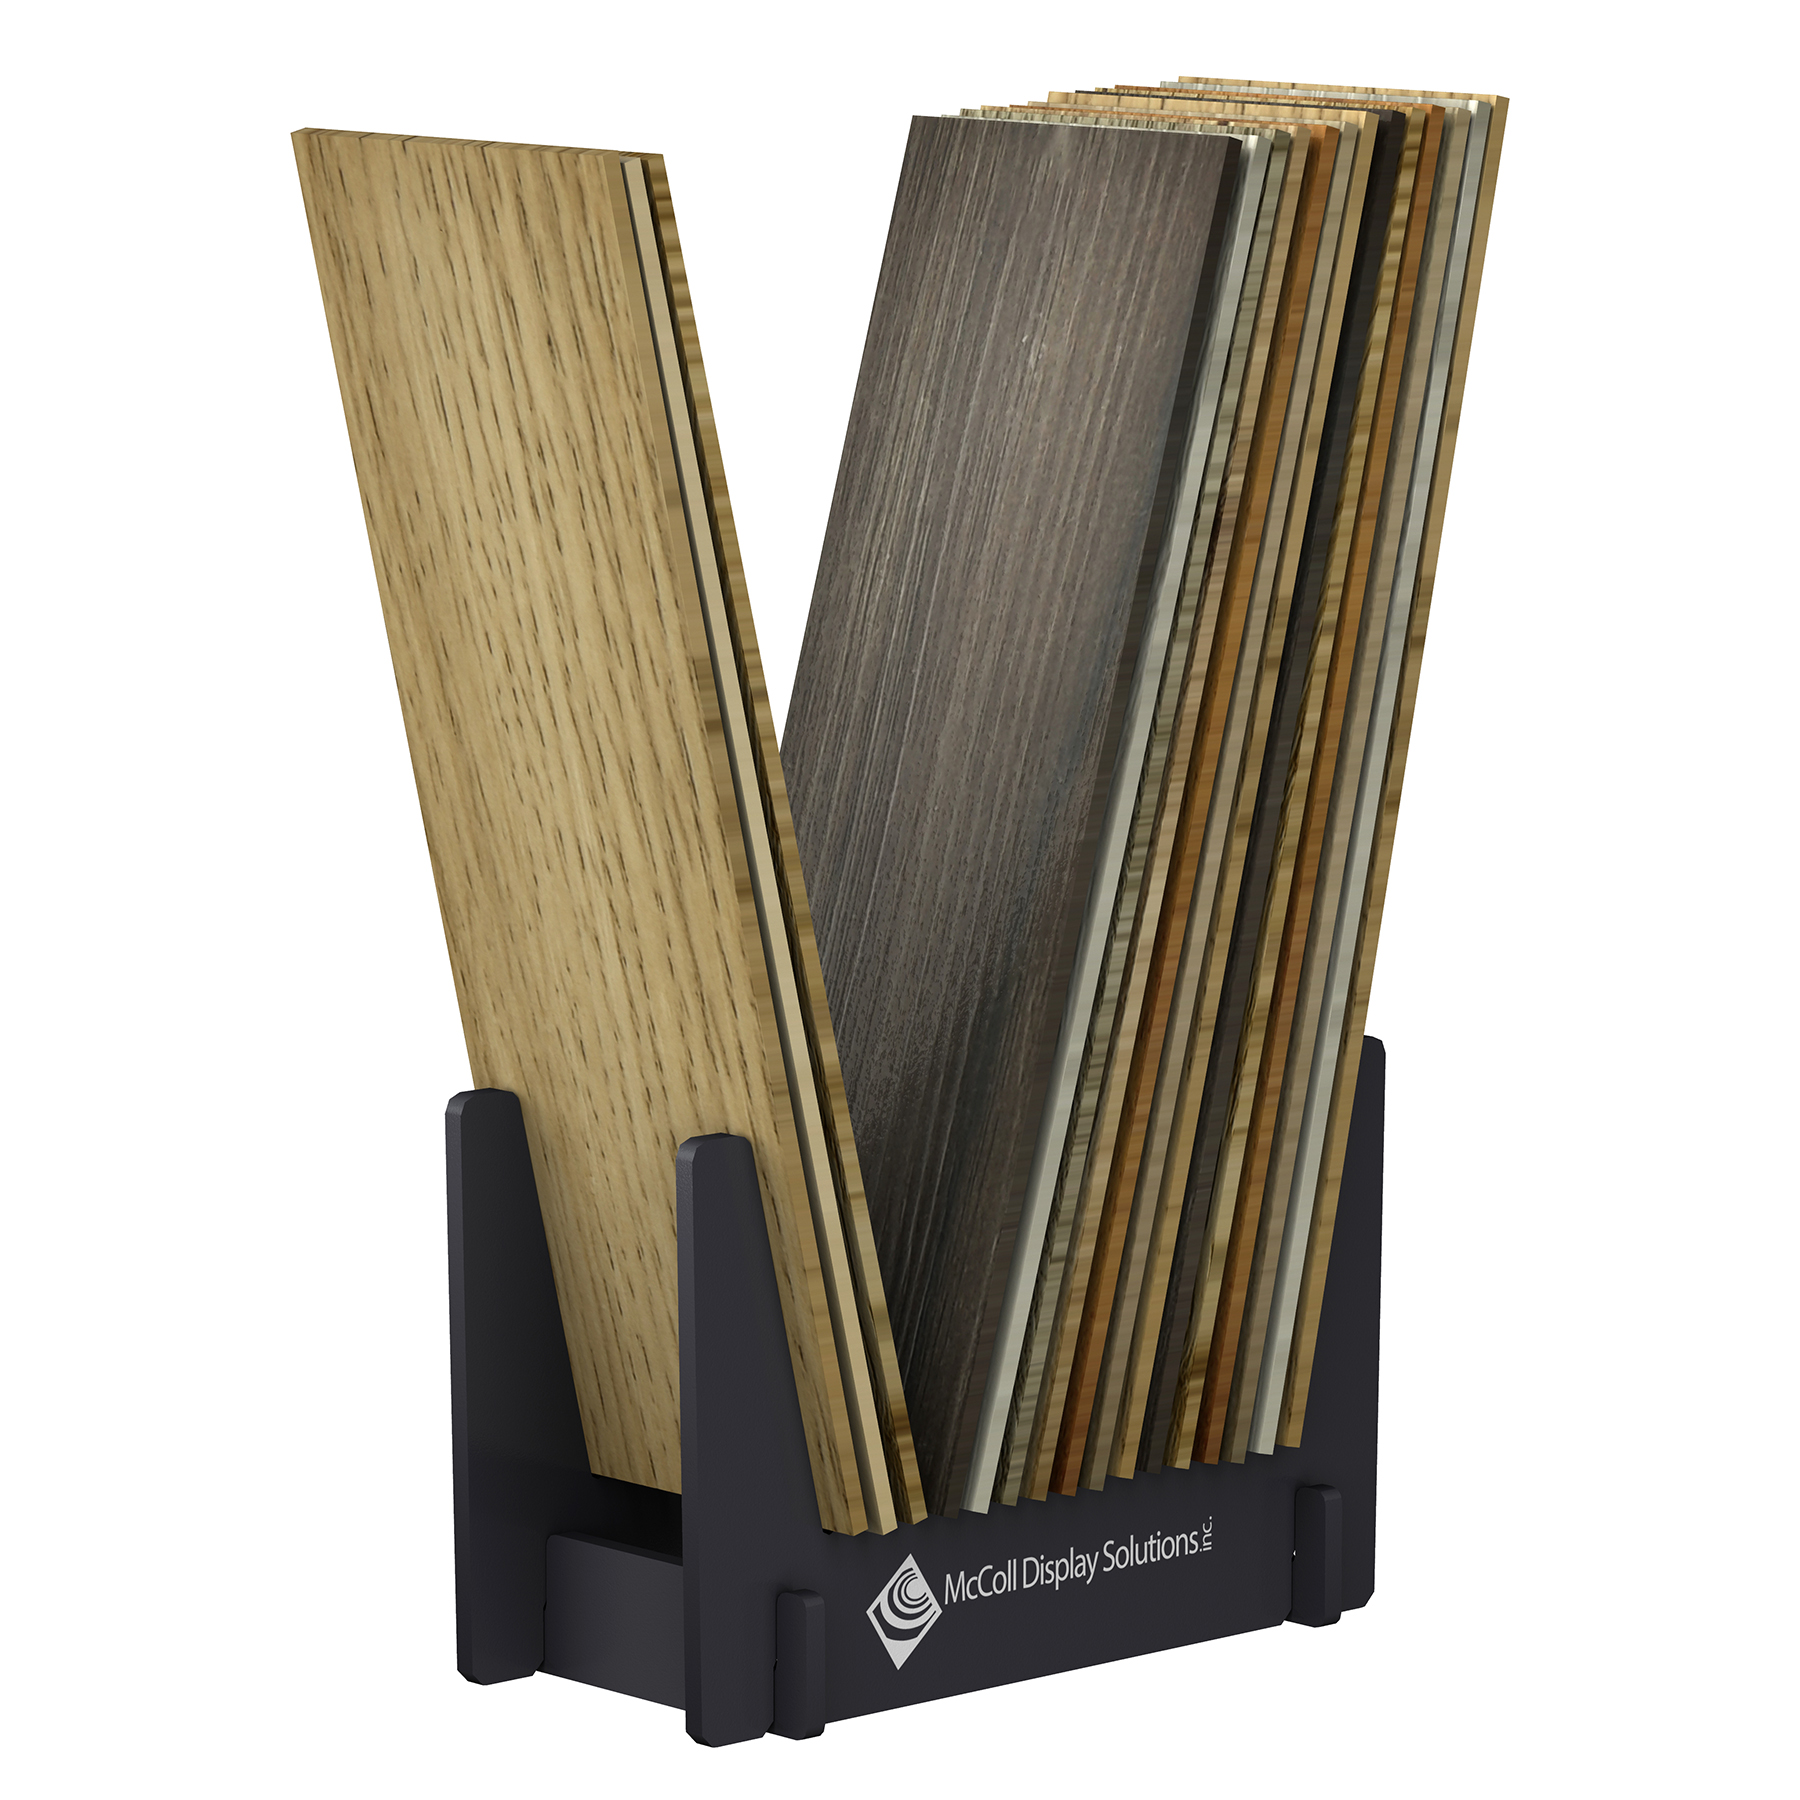 Versatile Cradle Display Holds Many Size Options for Hardwood Plank Samples, Loose Ceramic Tiles or Sample Boards